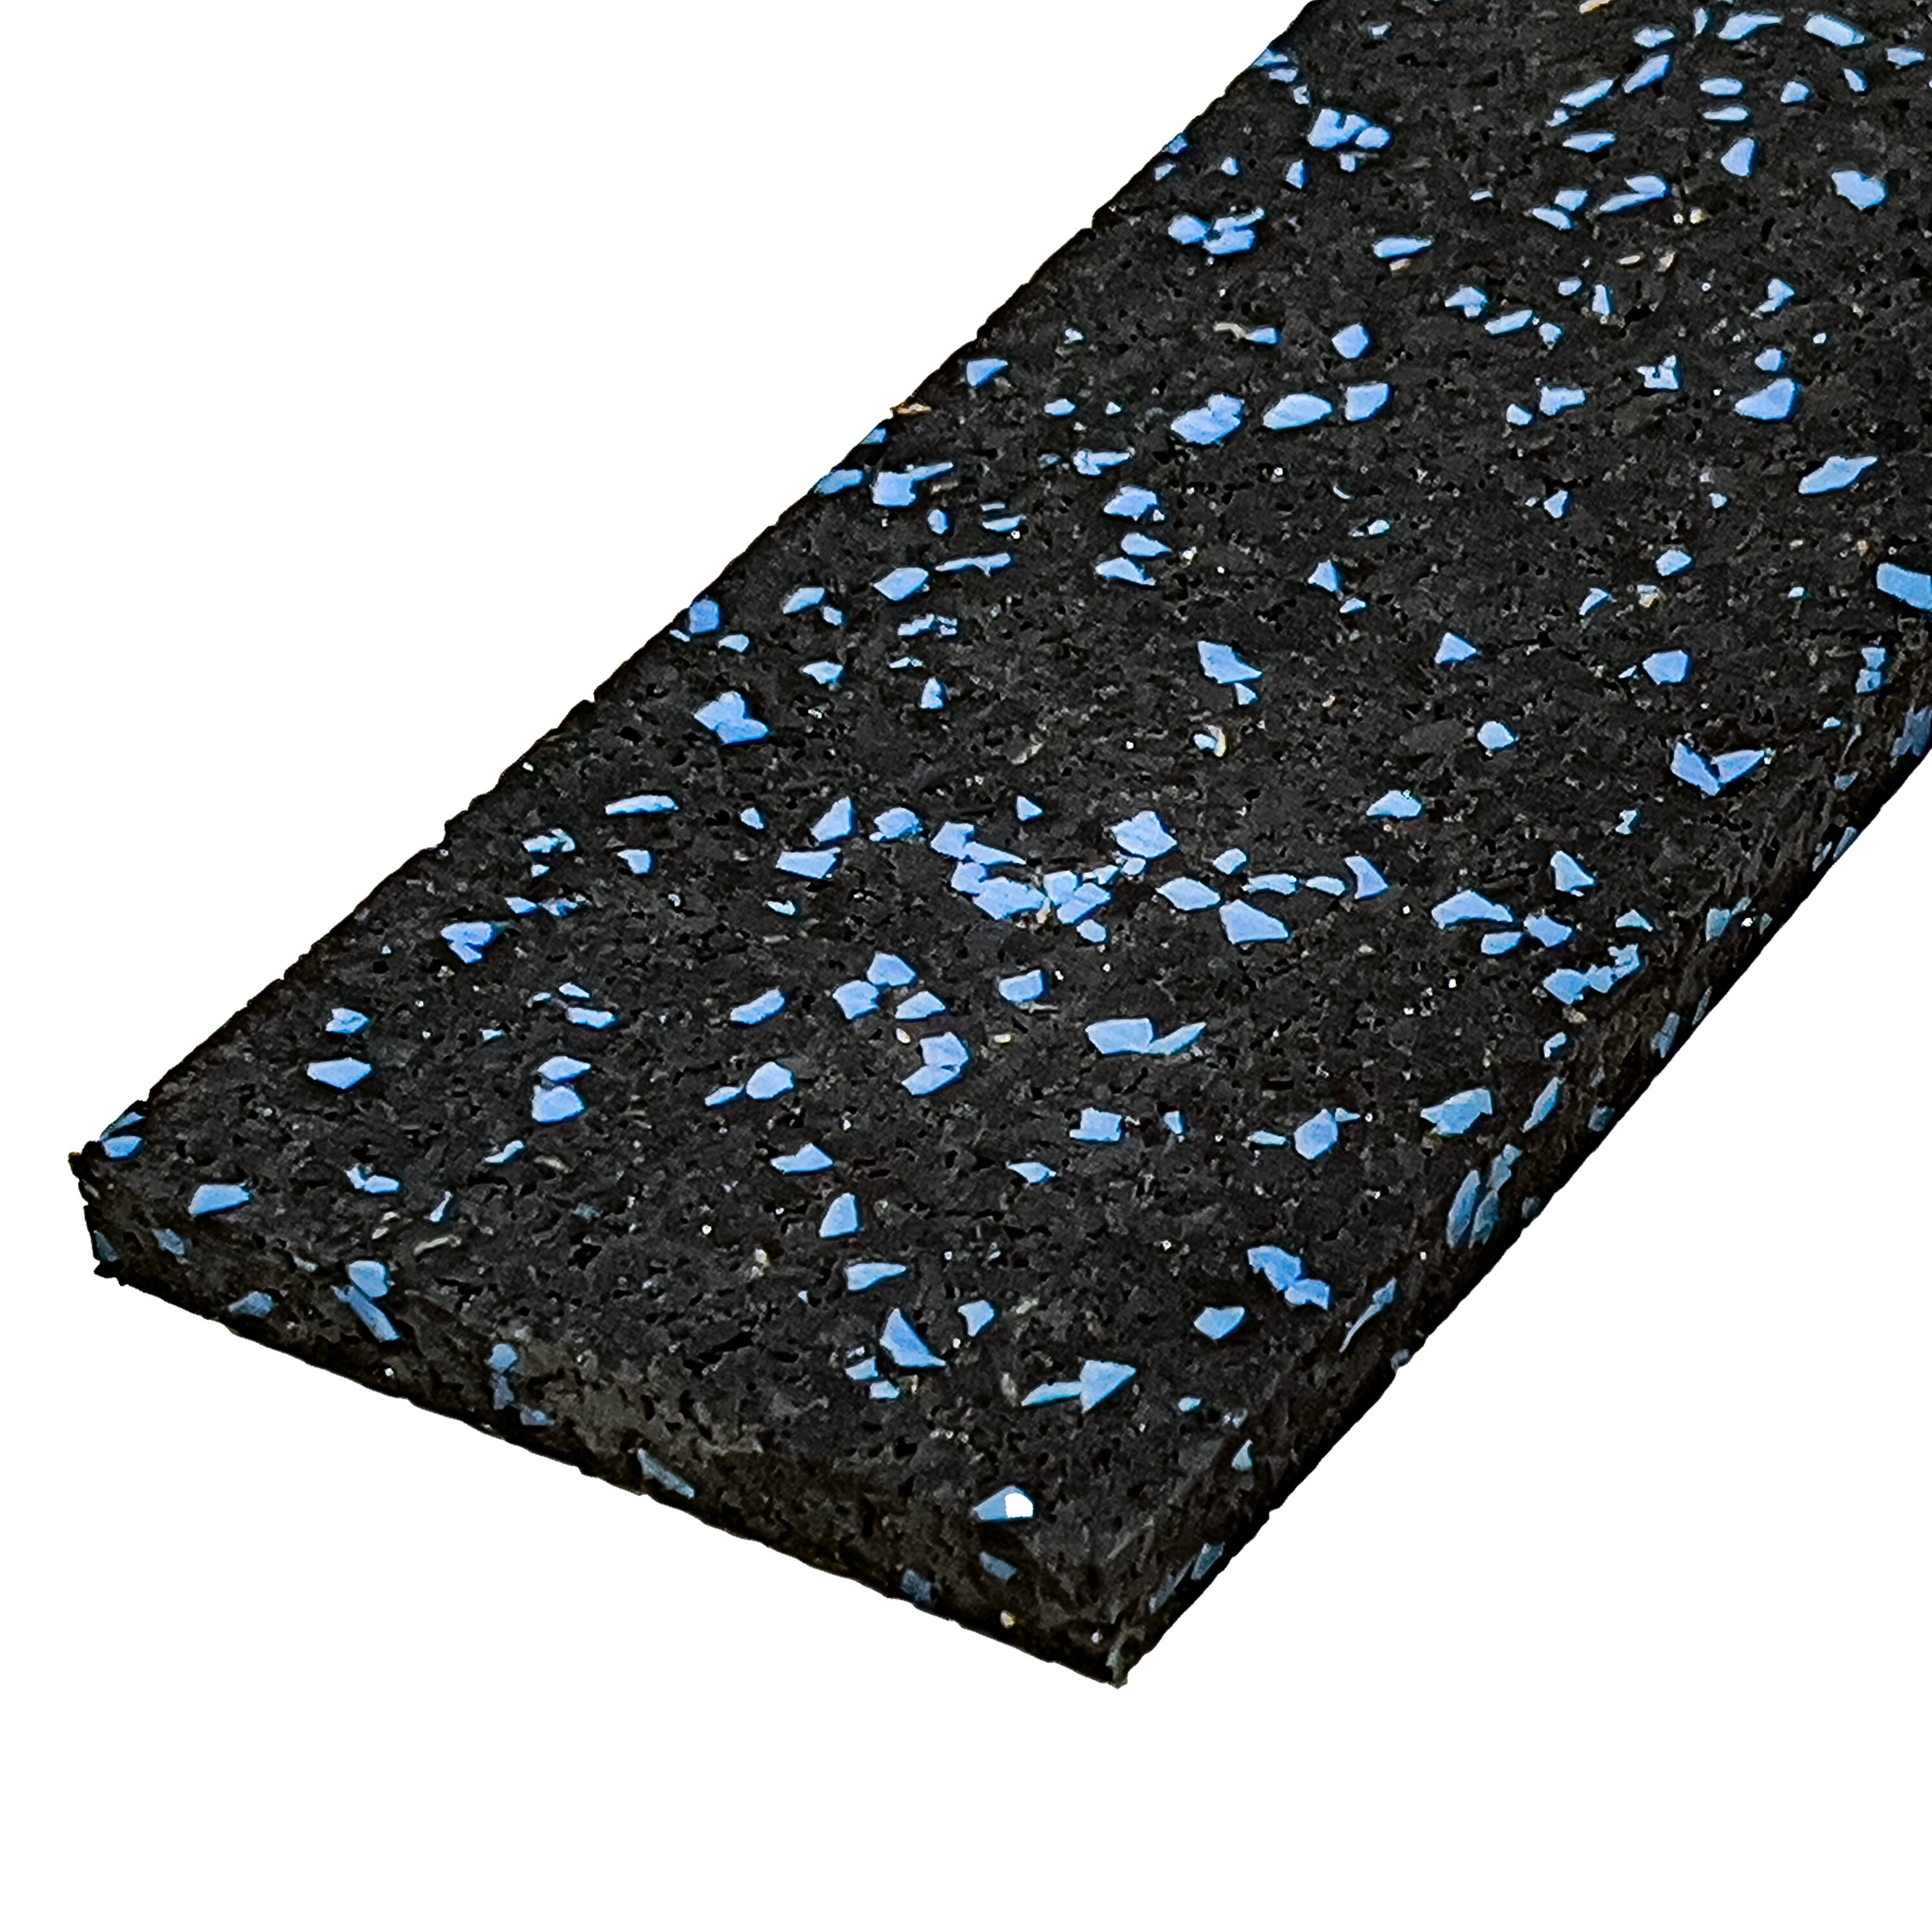 Černo-modrá gumová soklová podlahová lišta FLOMA FitFlo IceFlo - délka 200 cm, šířka 7 cm, tloušťka 0,8 cm